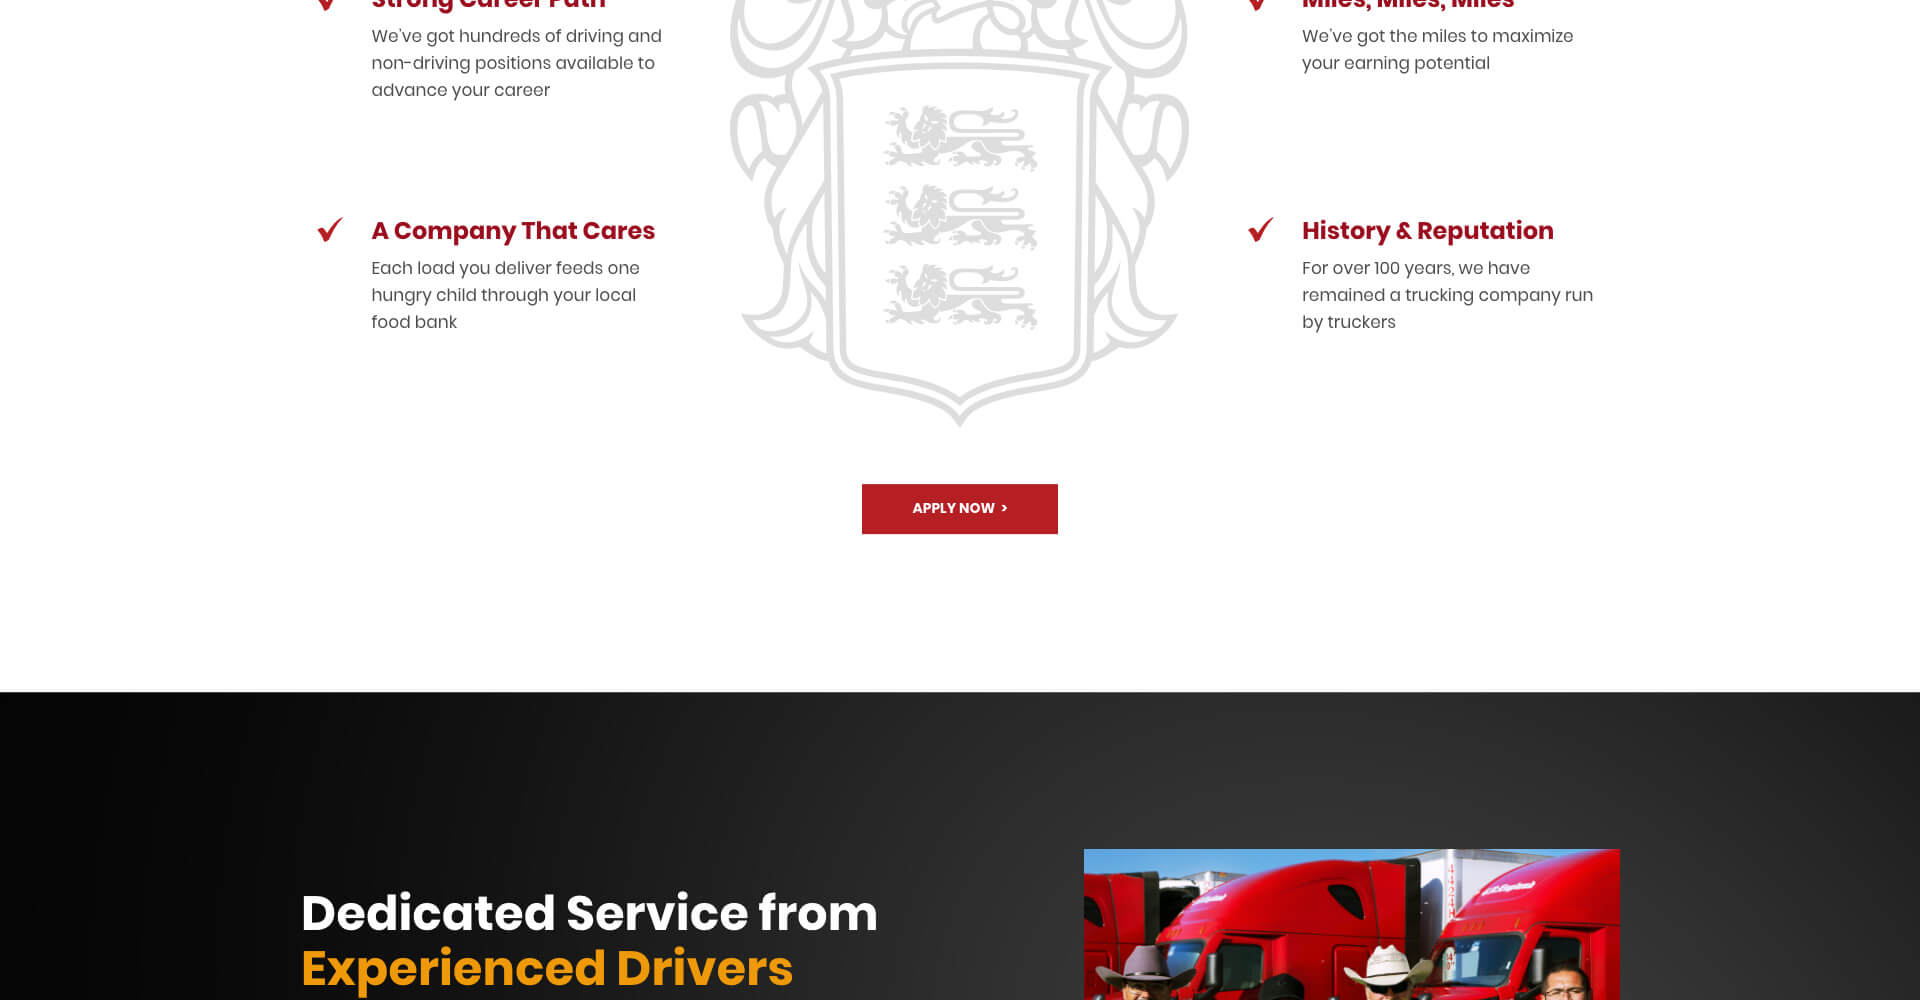 Homepage screenshot of C.R. England 